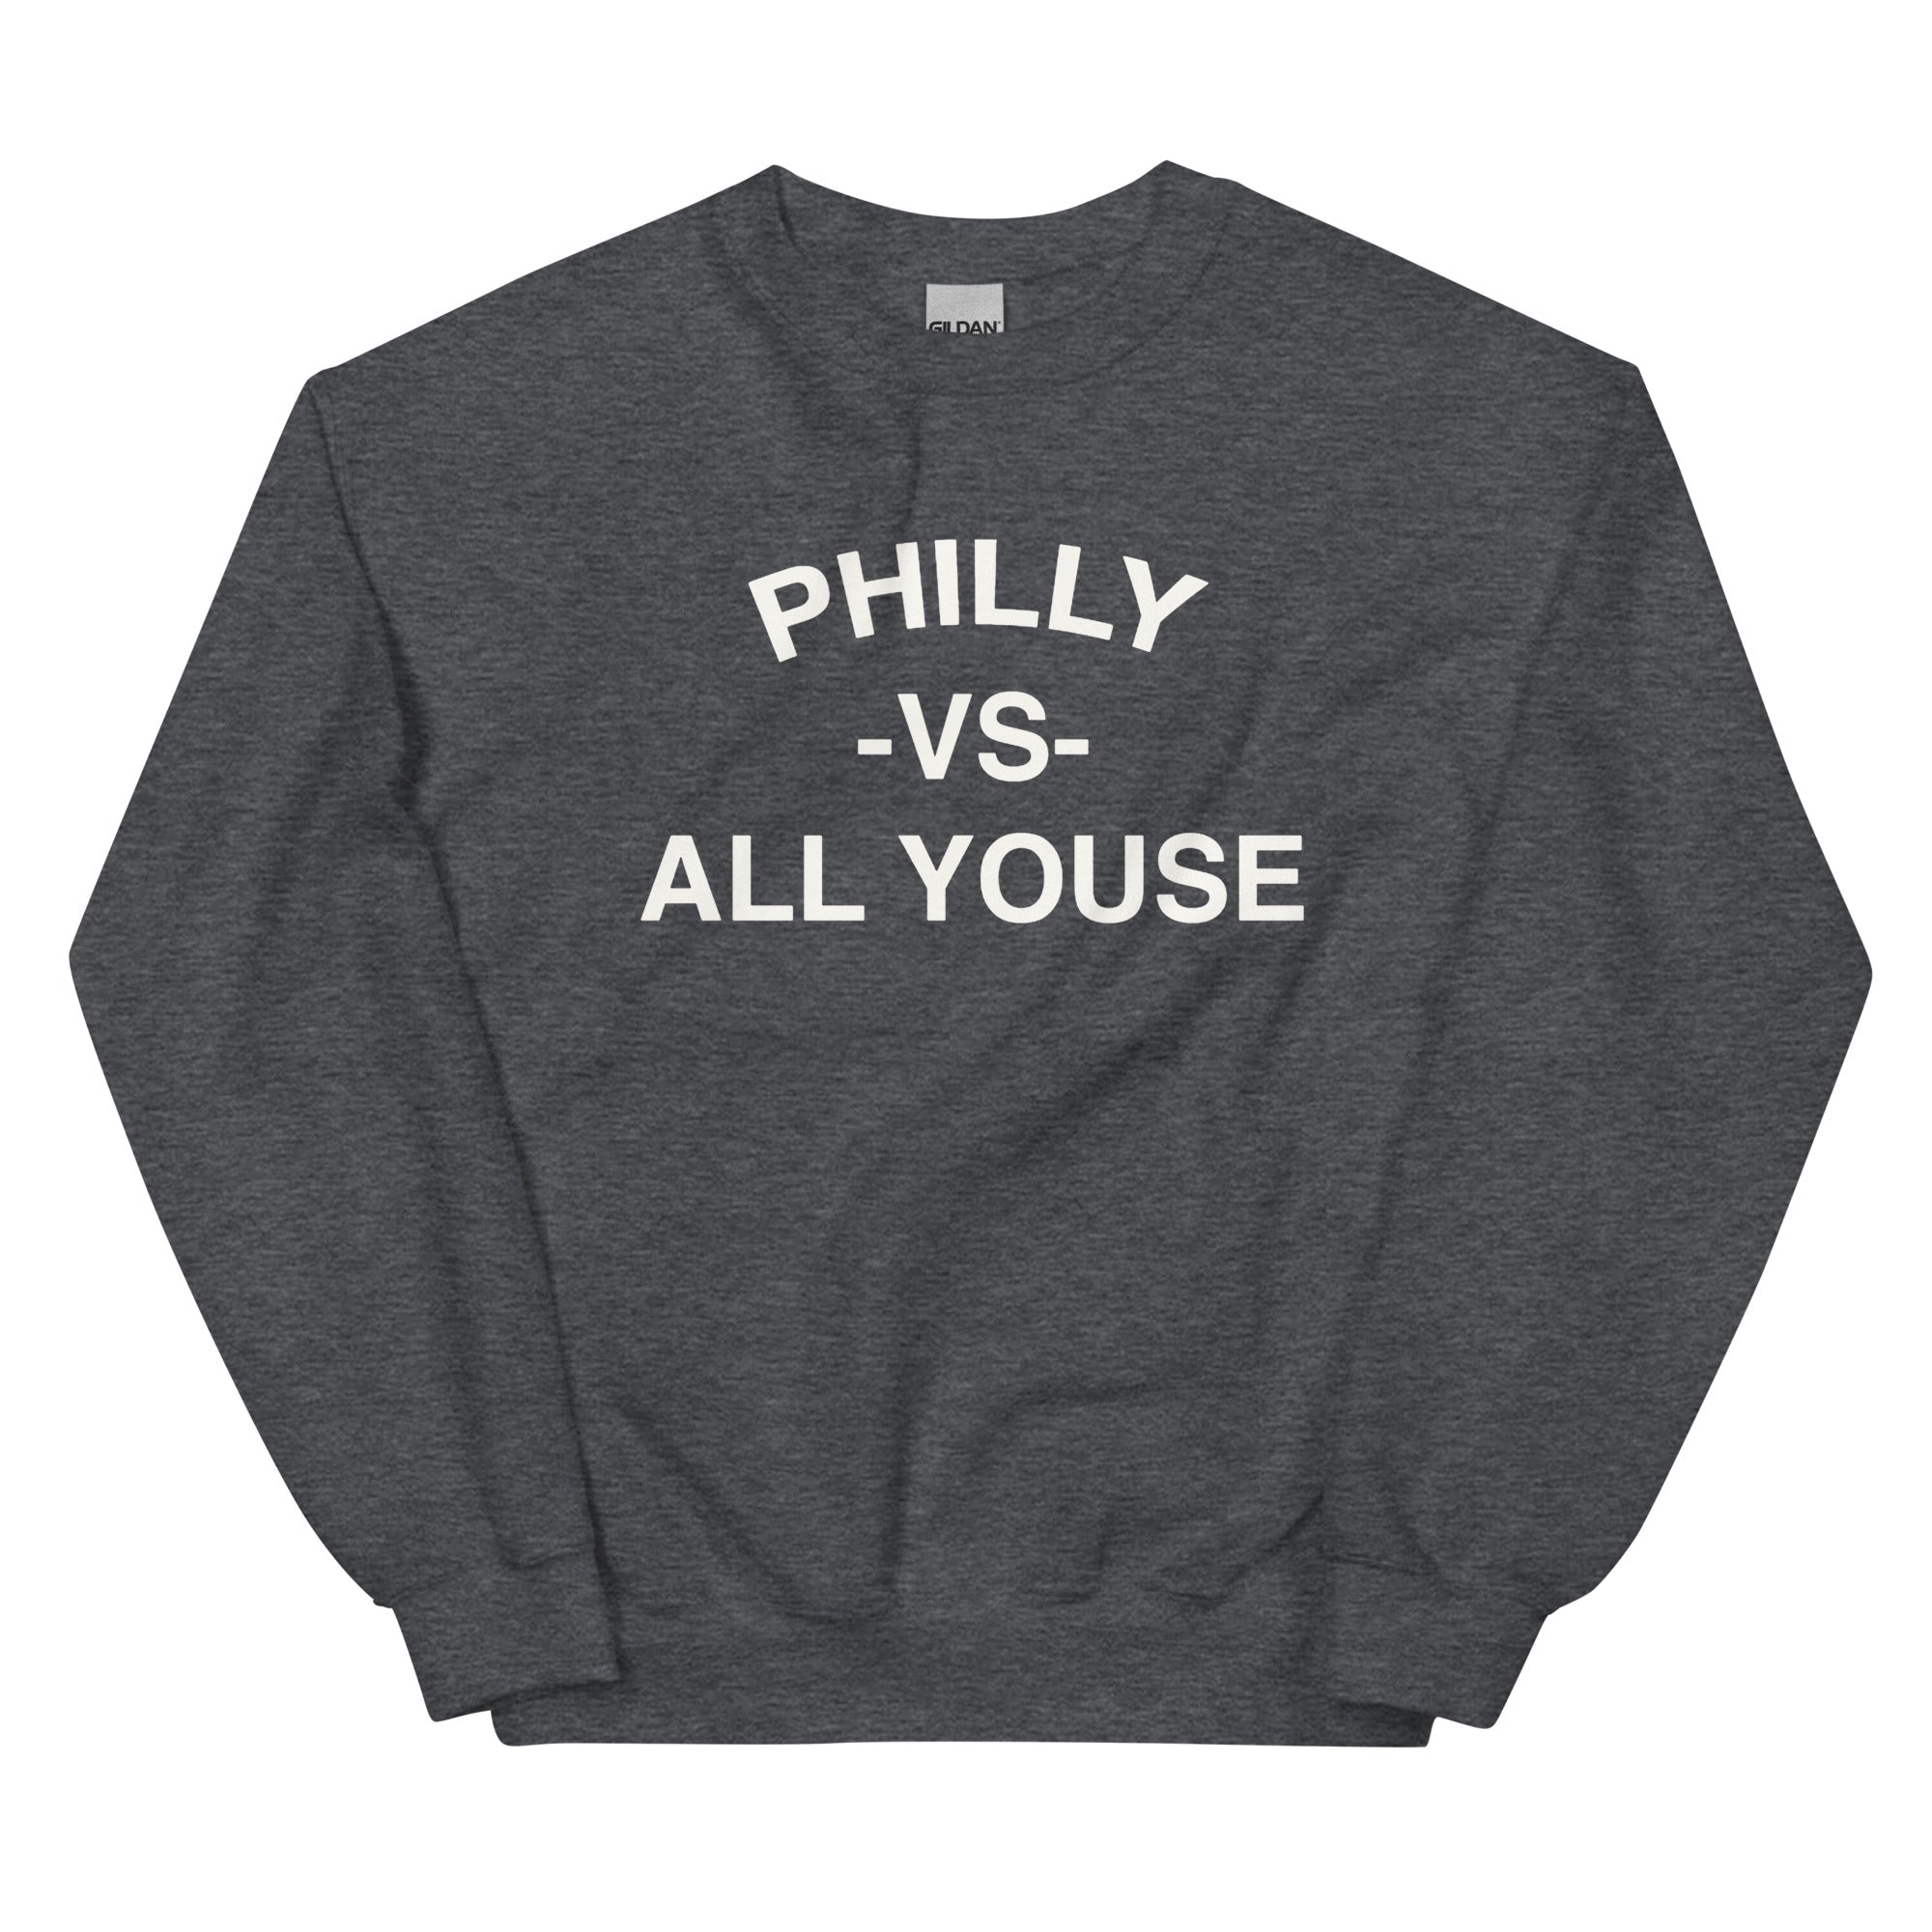 Philadelphia vs everybody philly vs all youse dark heather grey sweatshirt Phillygoat